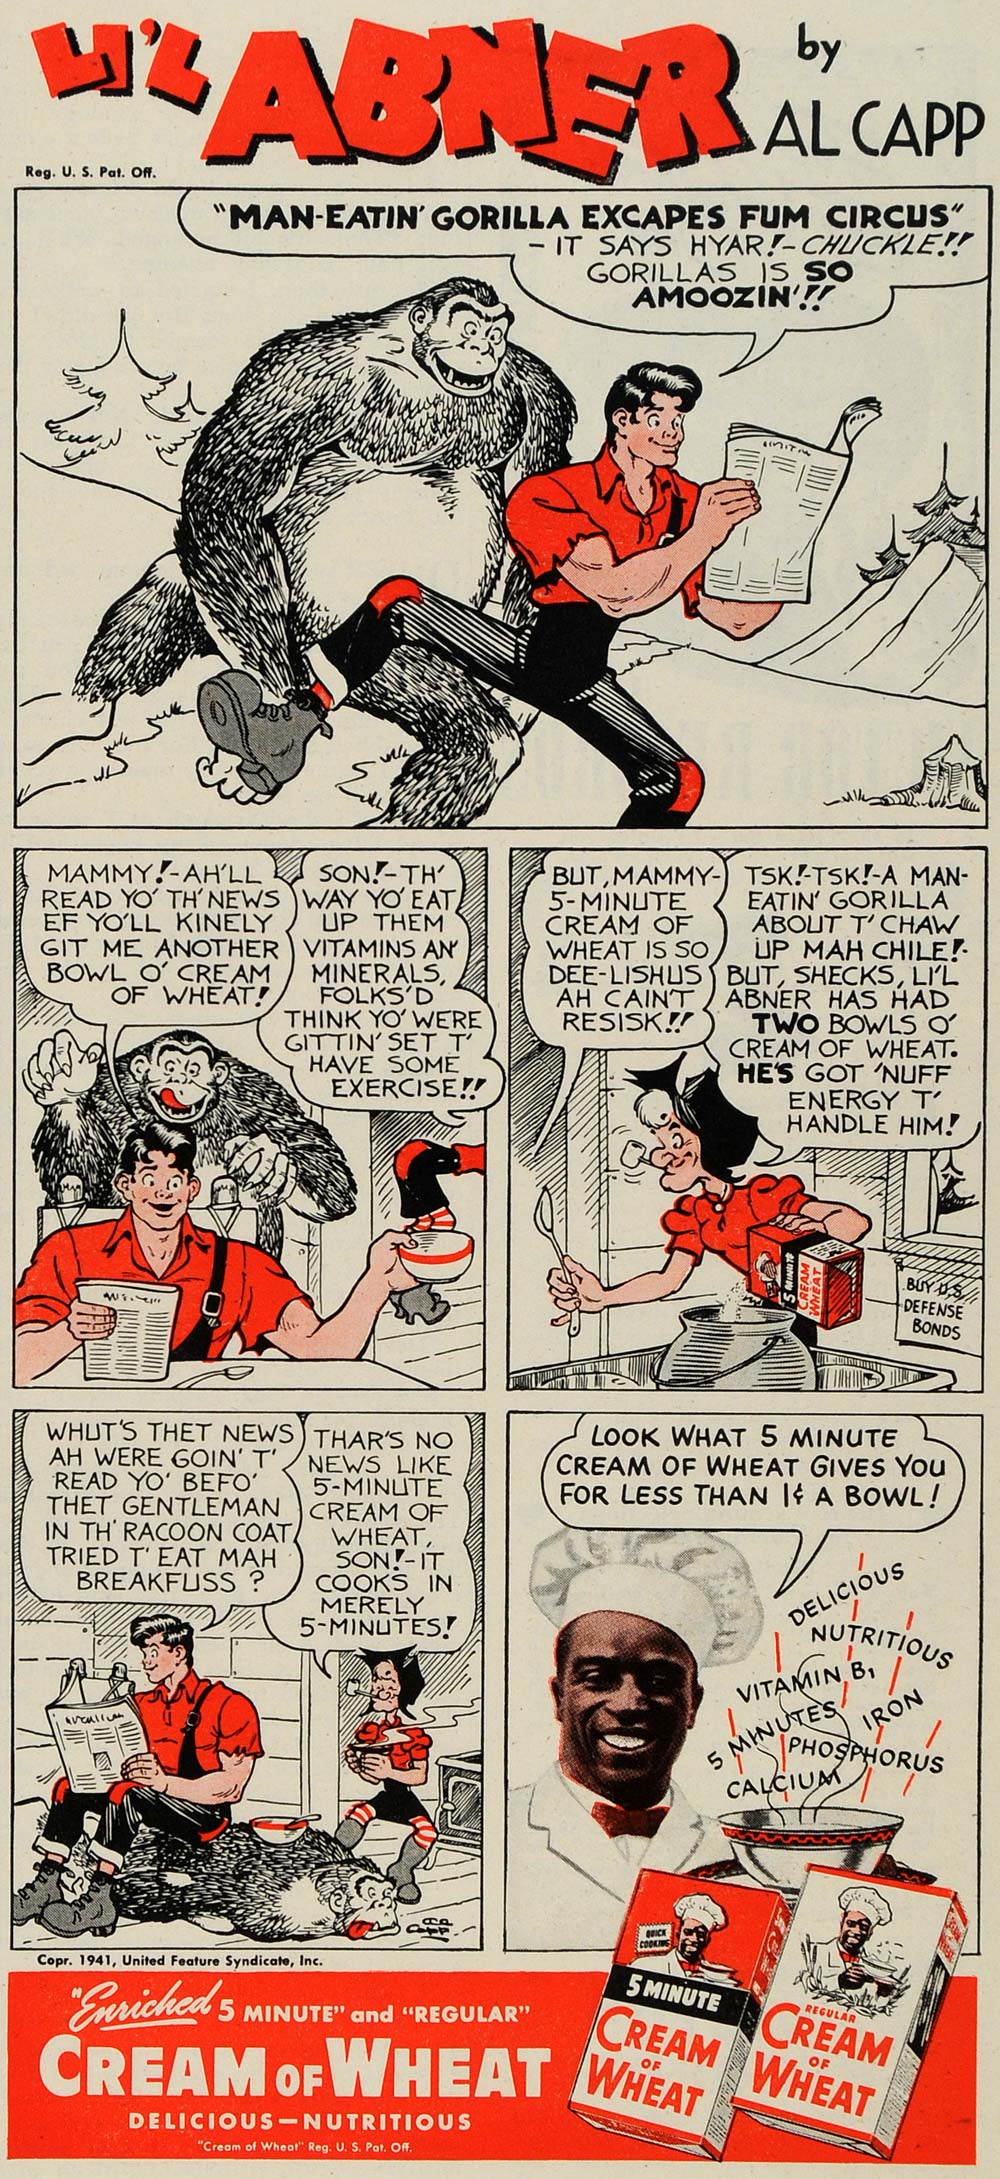 1942 Ad Al Capp Lil Abner Cream of Wheat Cartoon Cereal - ORIGINAL GH4